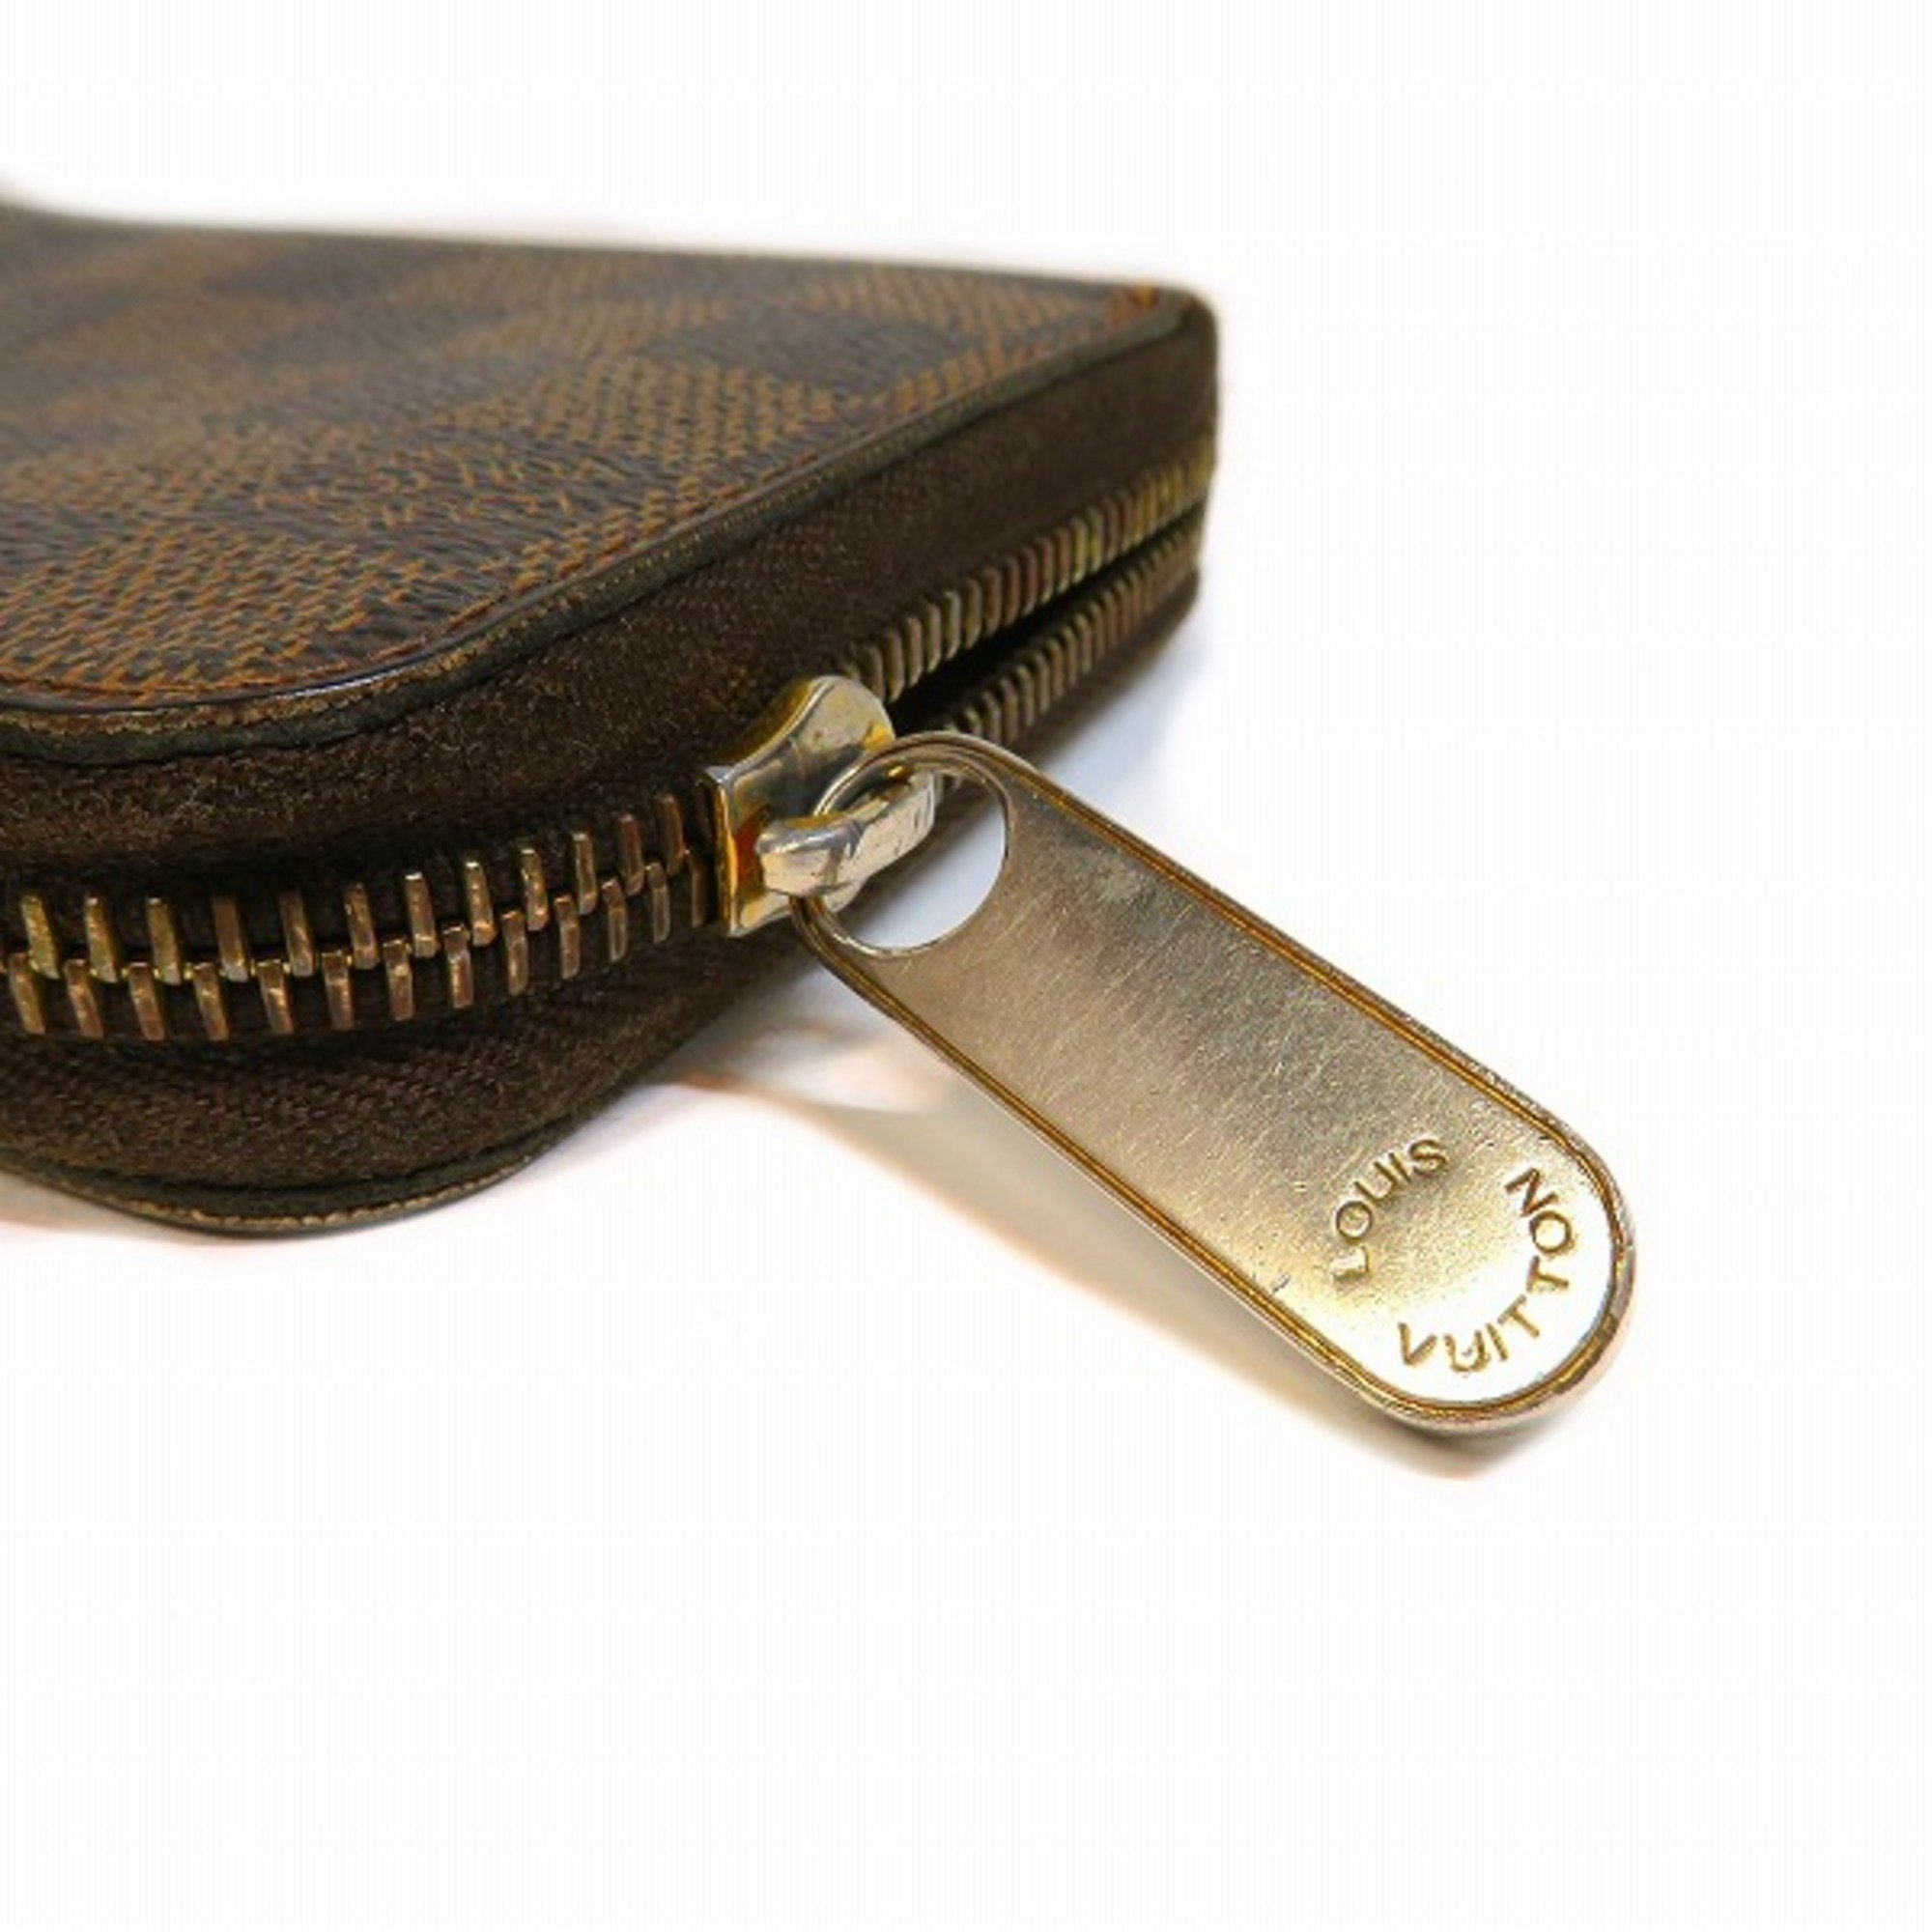 Louis Vuitton Damier Zippy Wallet N60015 Long for Women